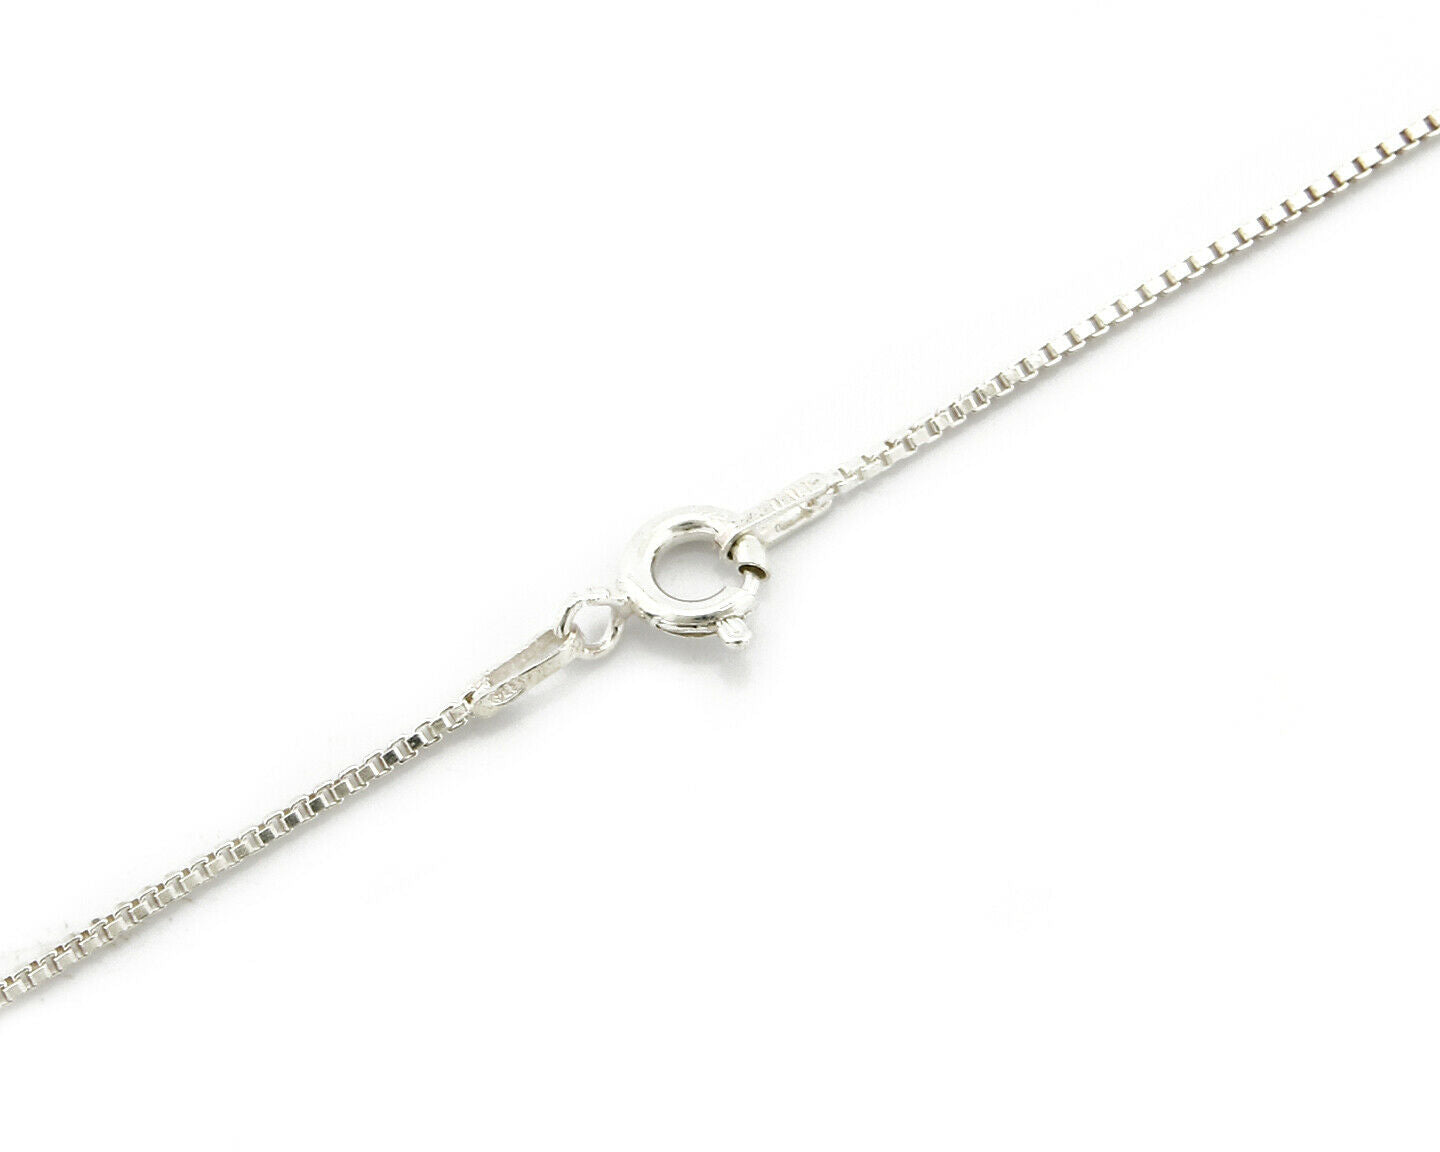 Women's Zuni Pendant .925 silver Gemstone Handmade Signed Chaloo Necklace